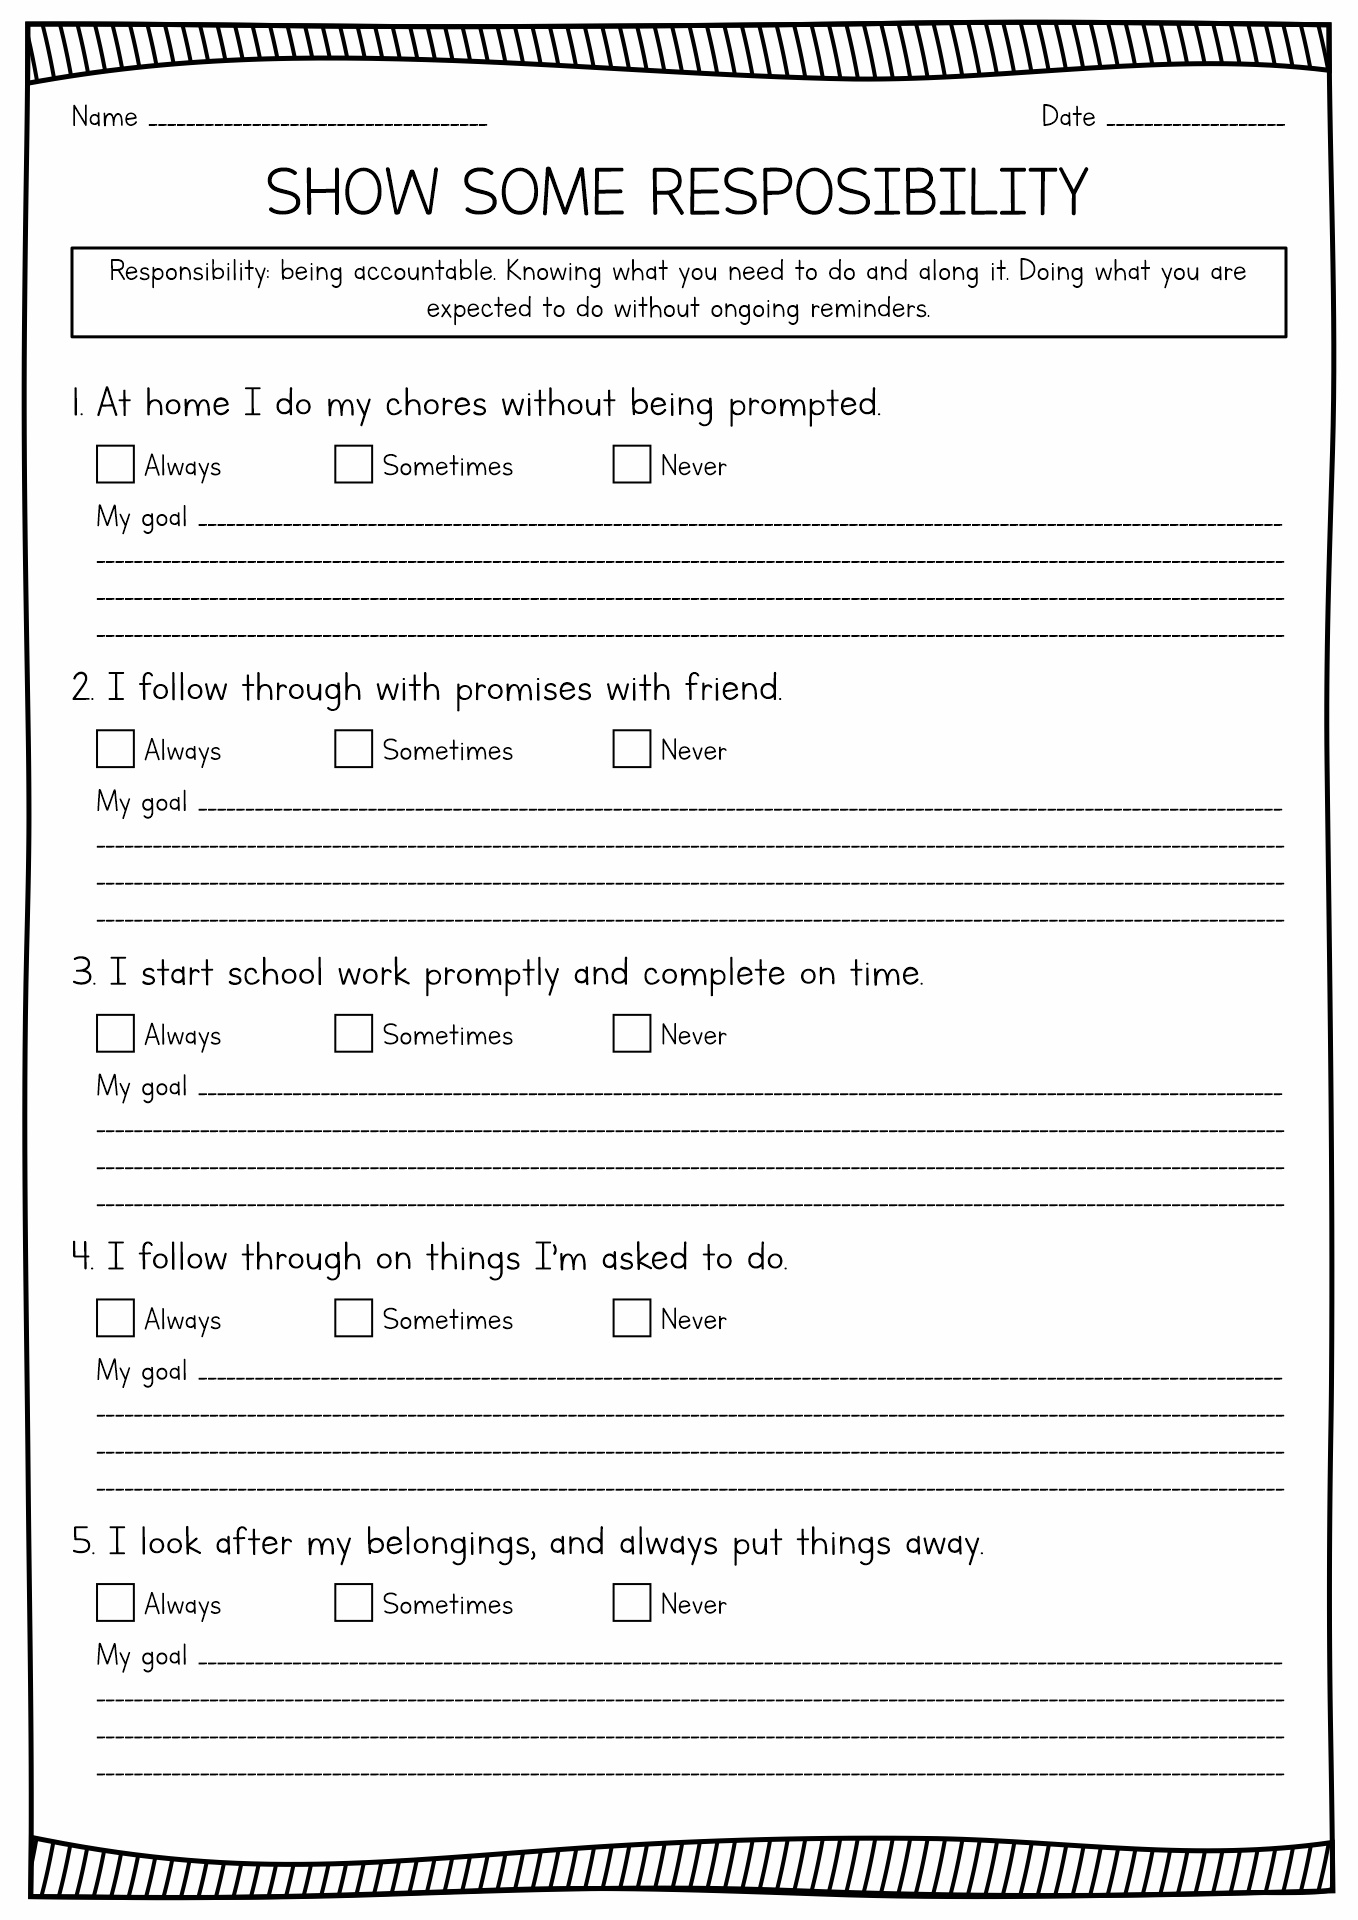 13-best-images-of-printable-worksheets-on-responsibility-kindergarten